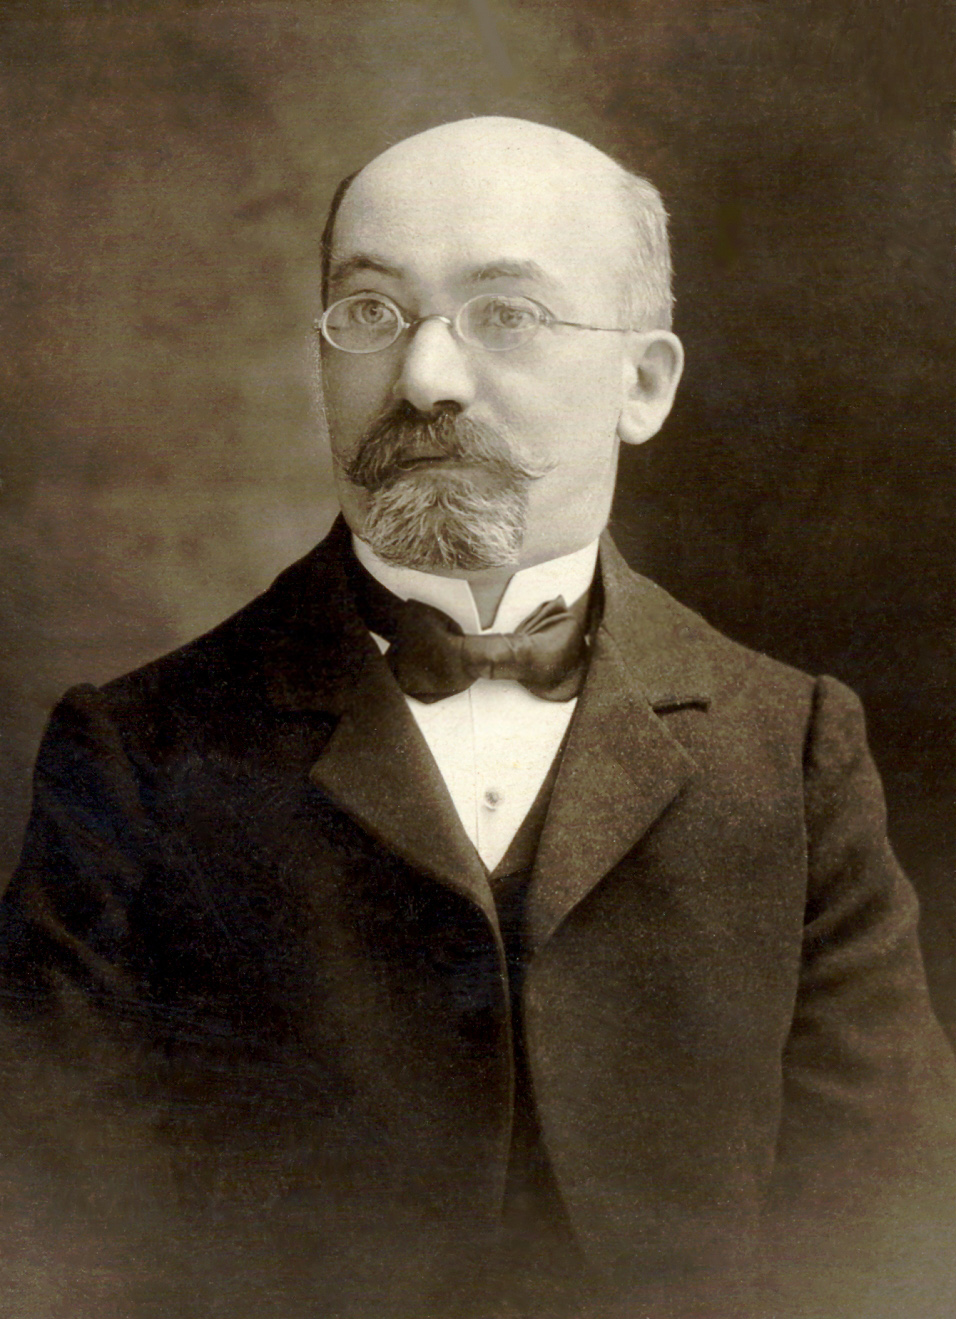 Dr. L. L. Zamenhof